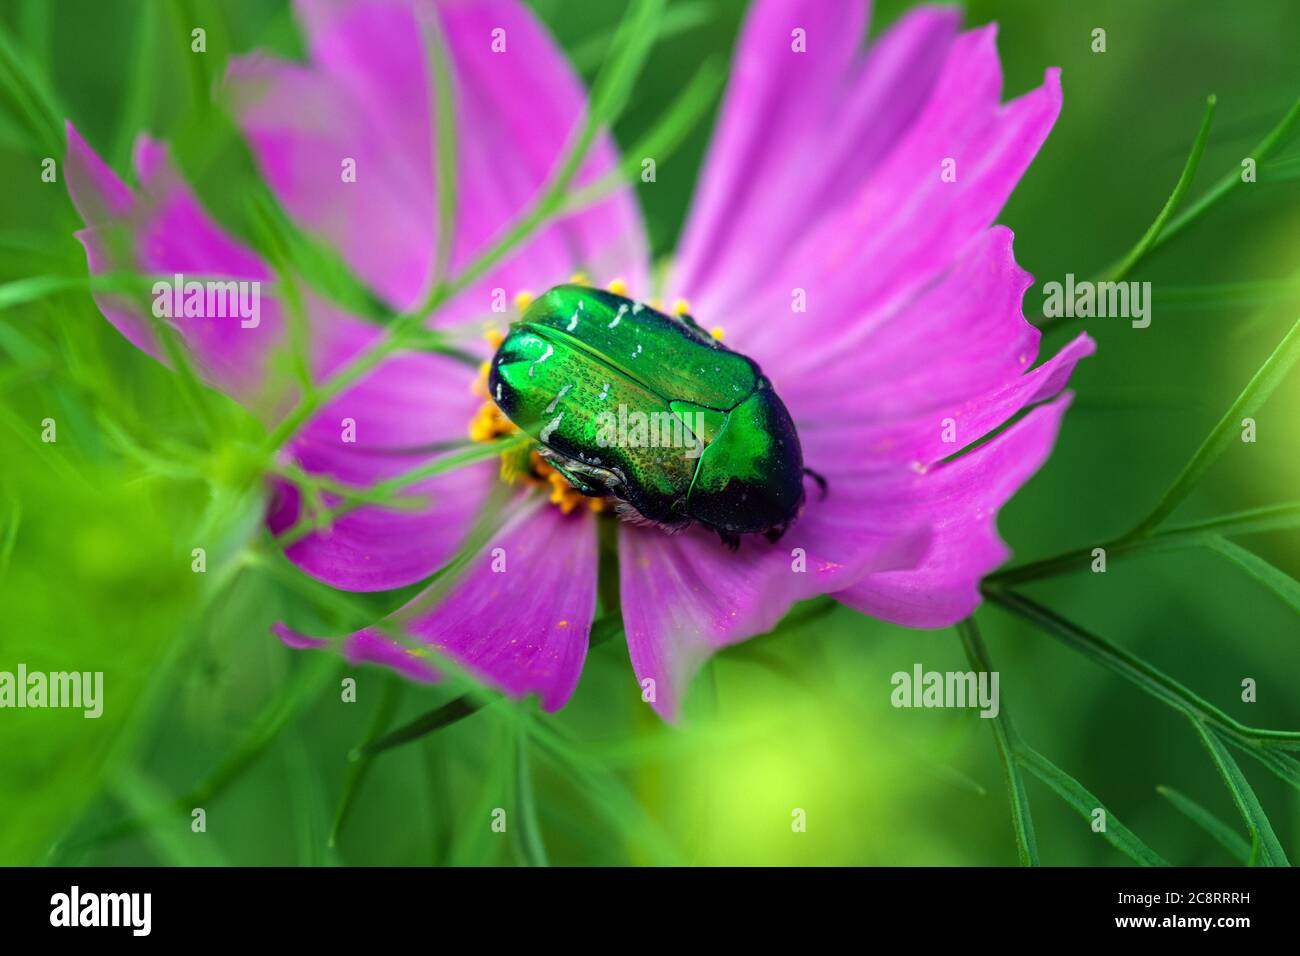 green june beetle life cycle